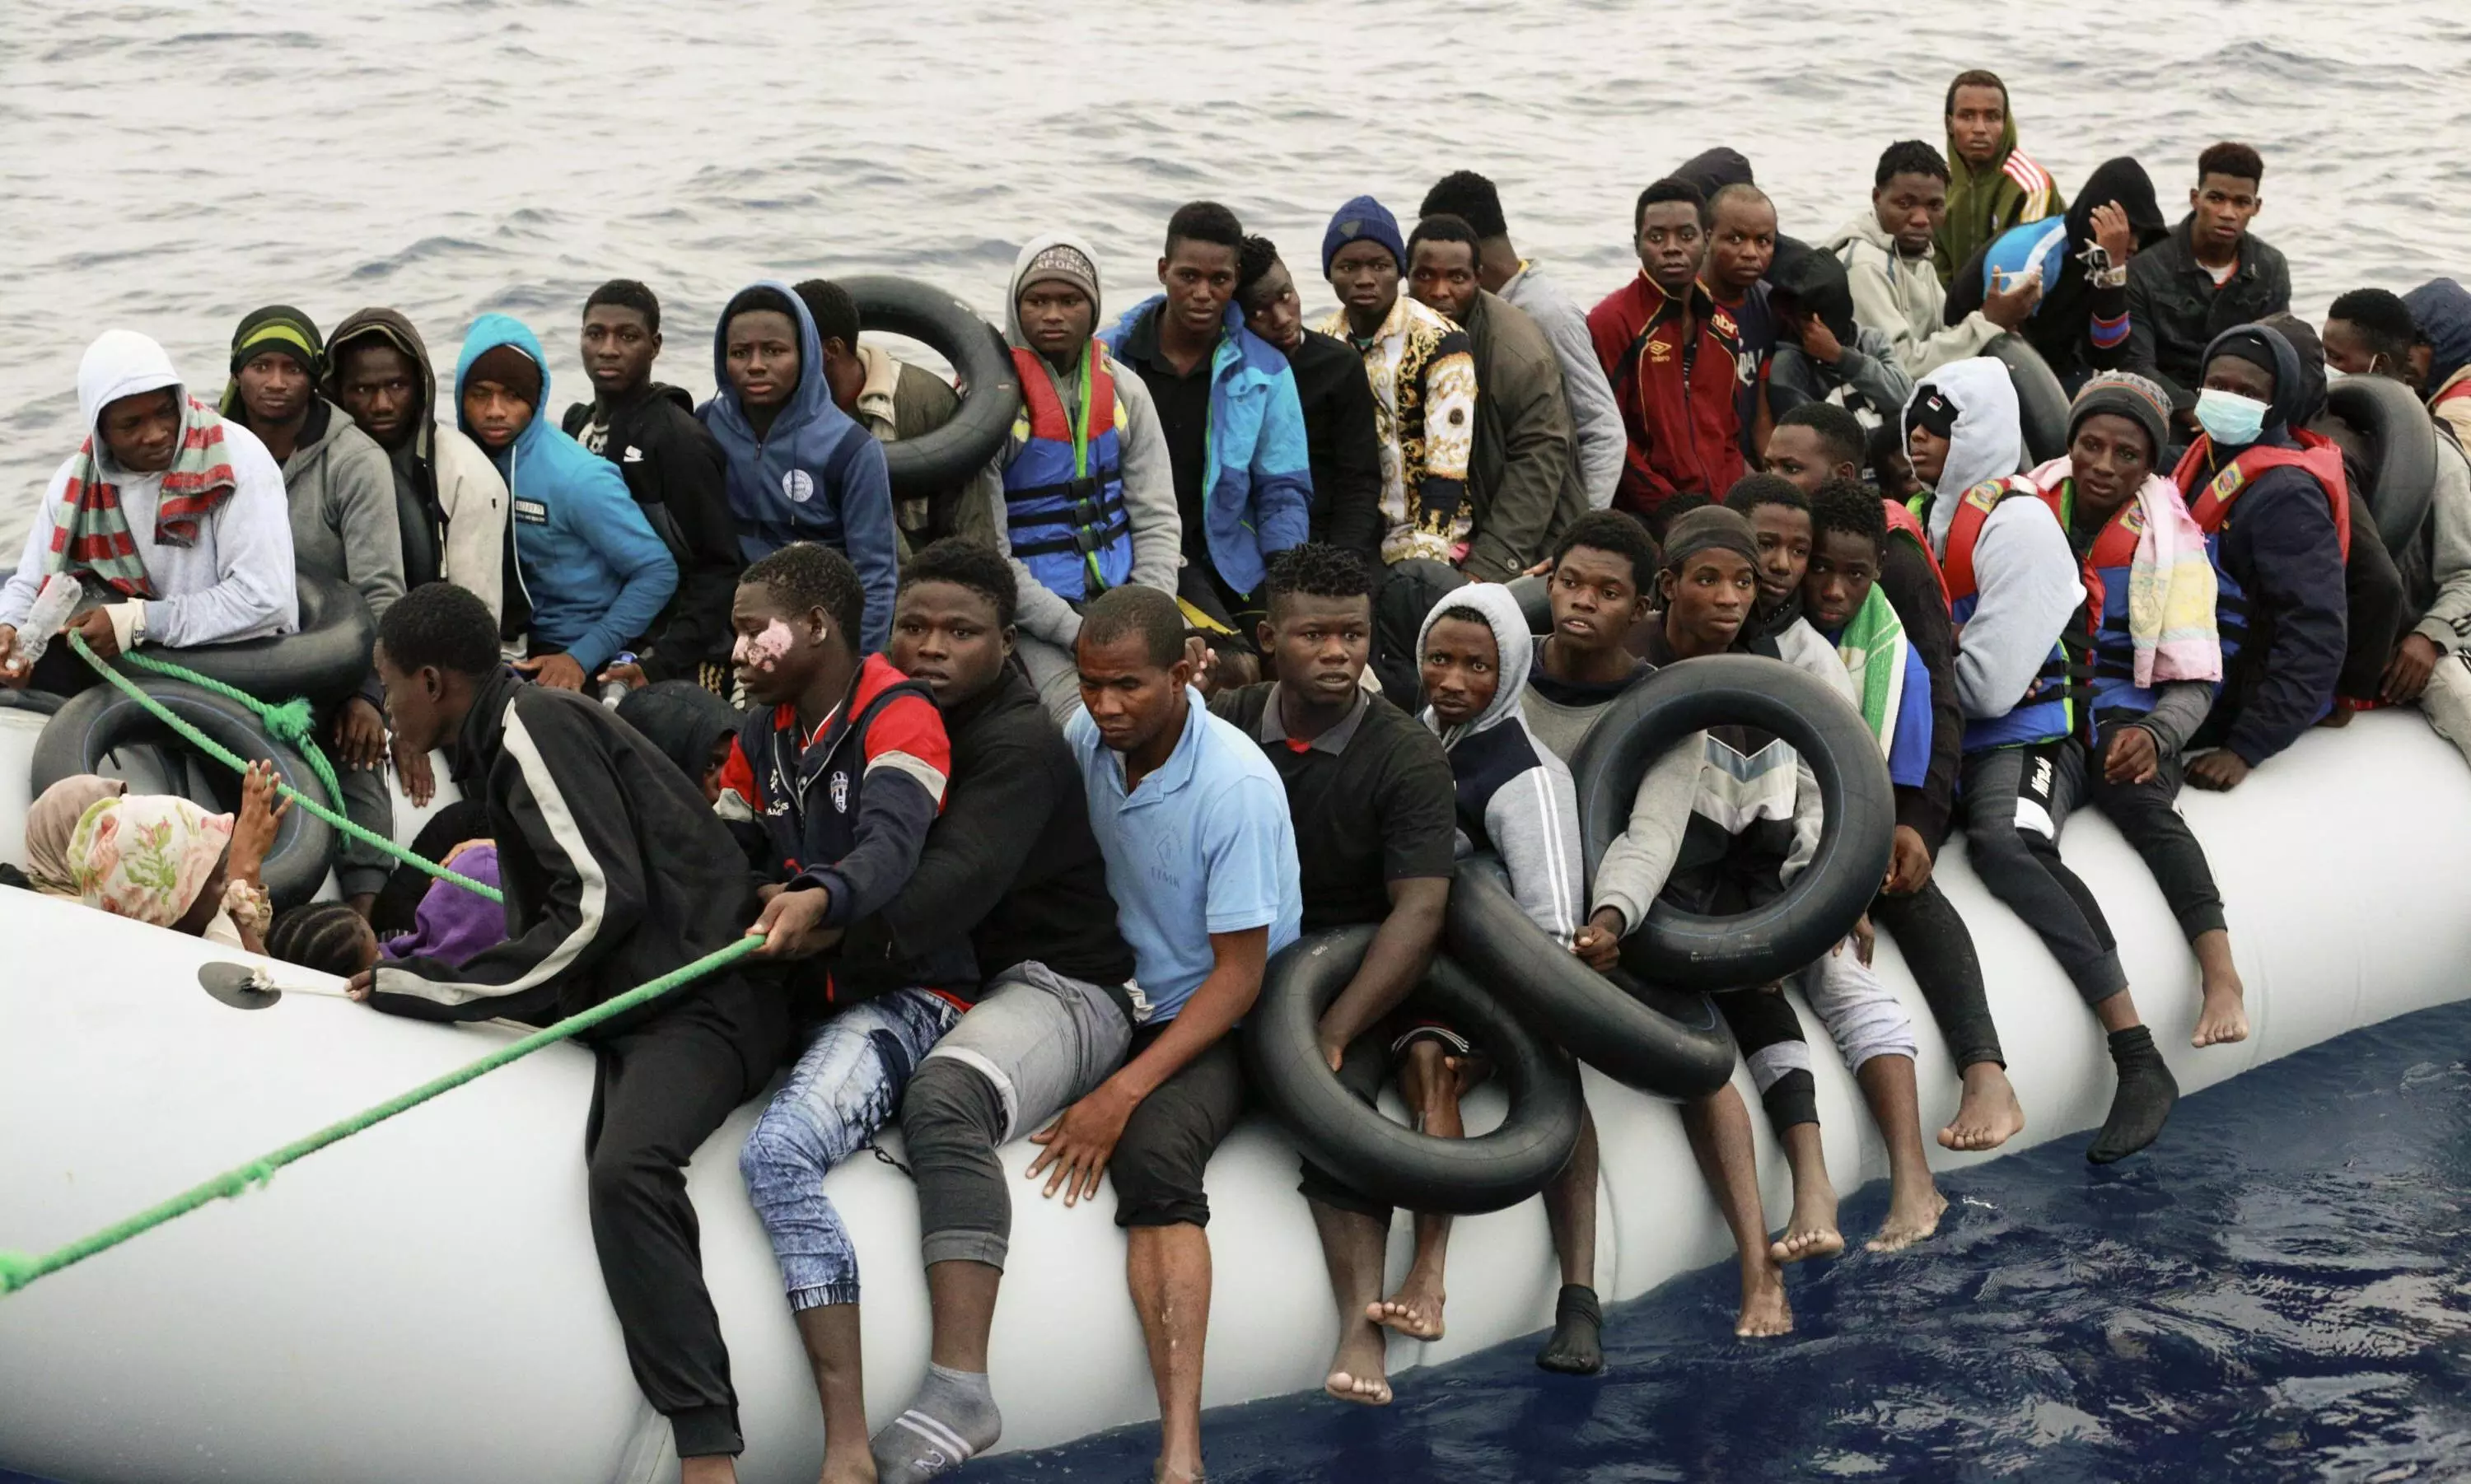 Europe ignoring the plight of Libyan people: NGO